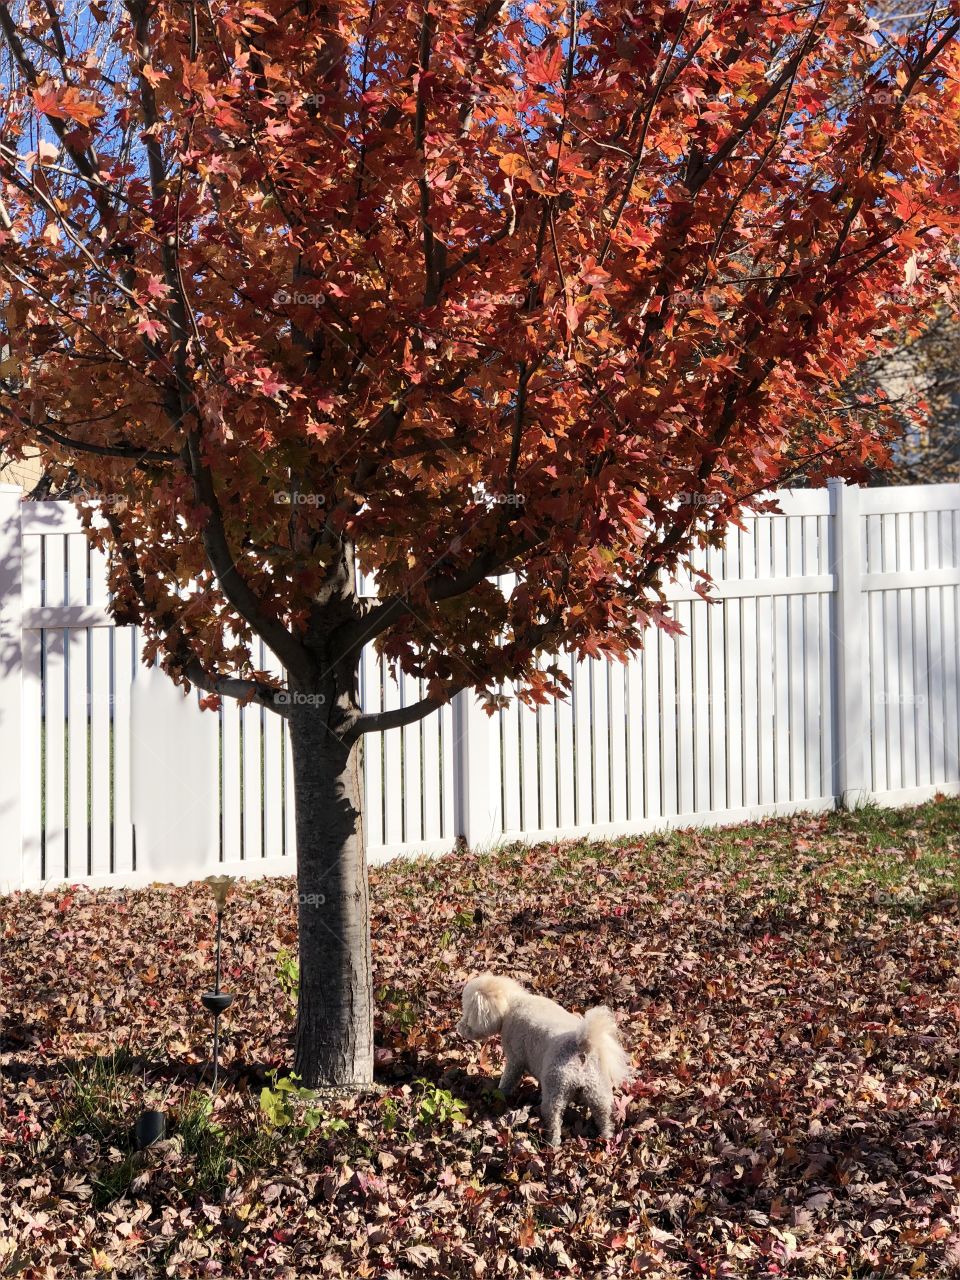 My dog, Kaycee, under a tree taken on 10/28/18